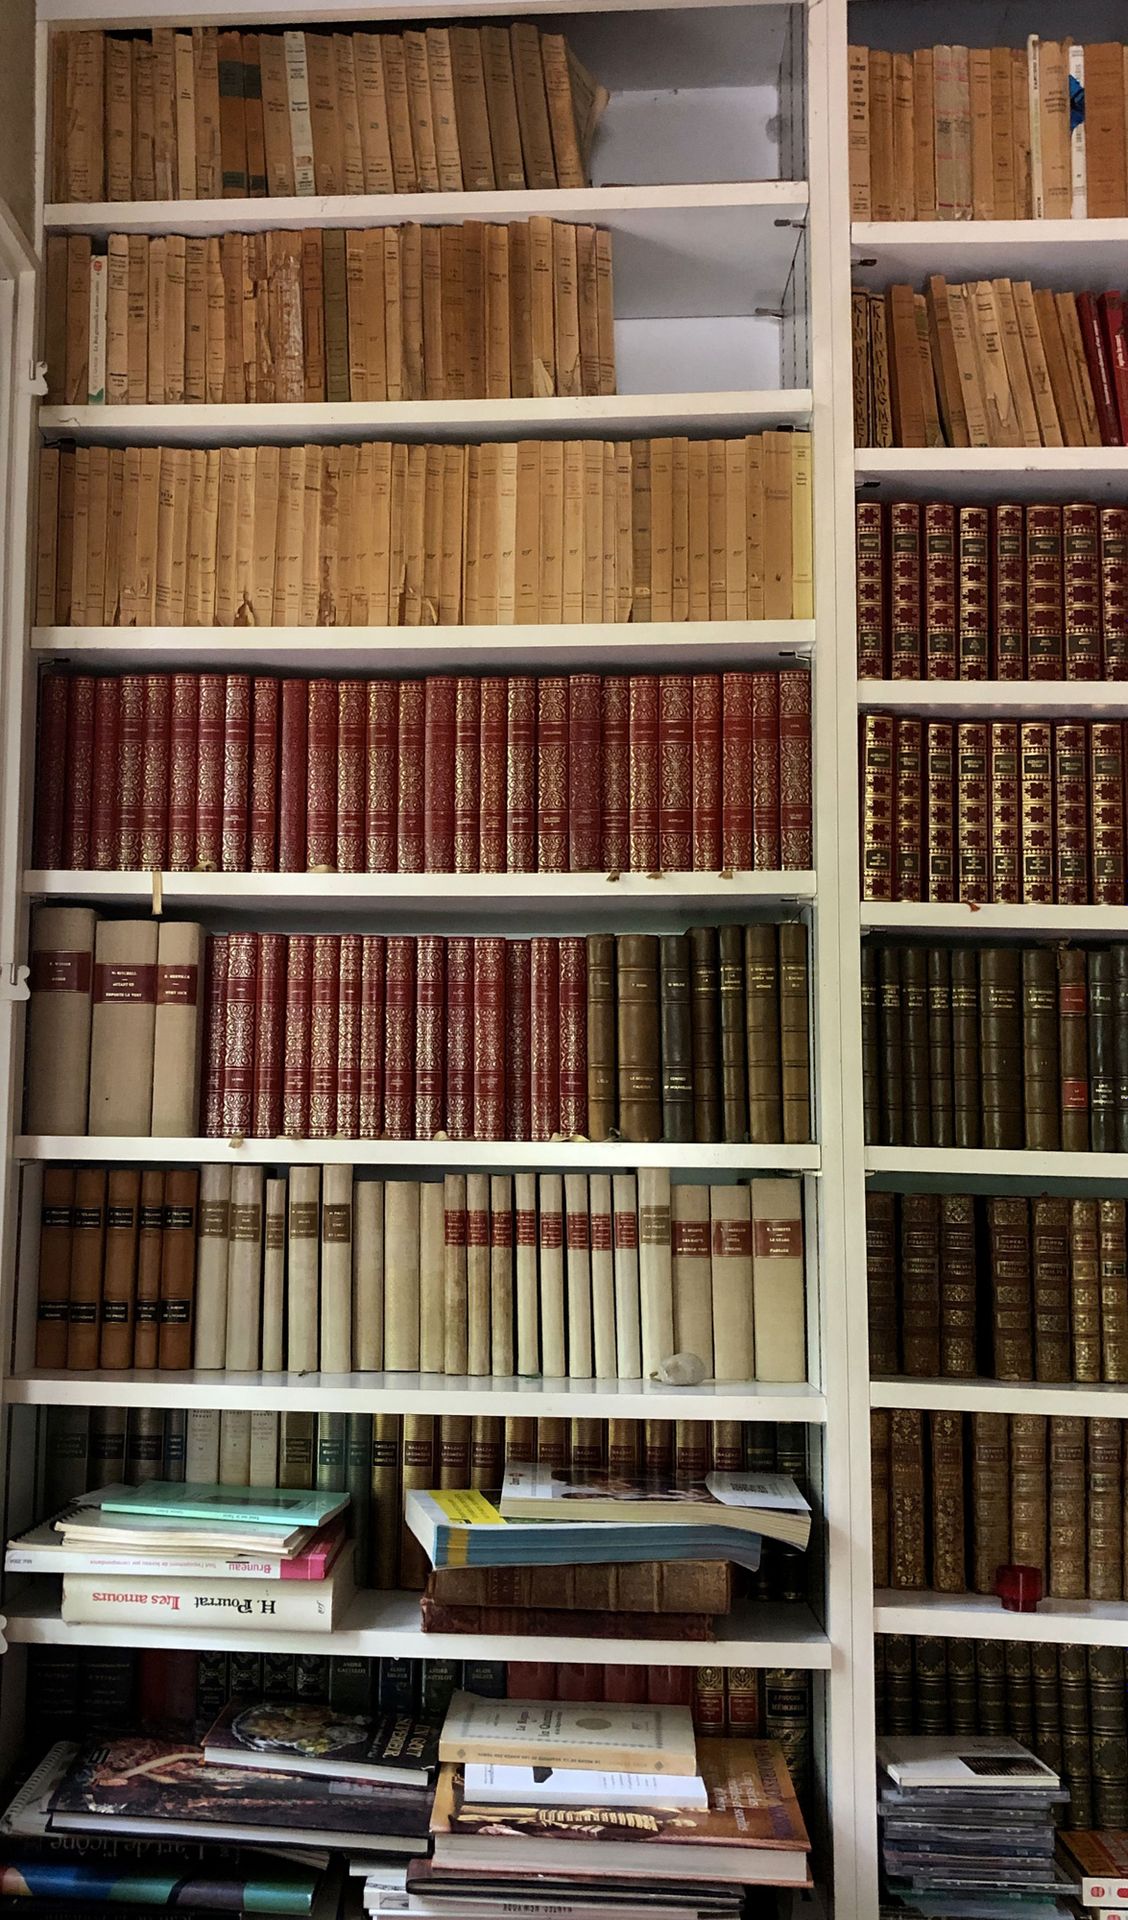 Null 图书馆基金包括一套重要的装订和平装书（地区，小说，装饰...） 十八至二十世纪